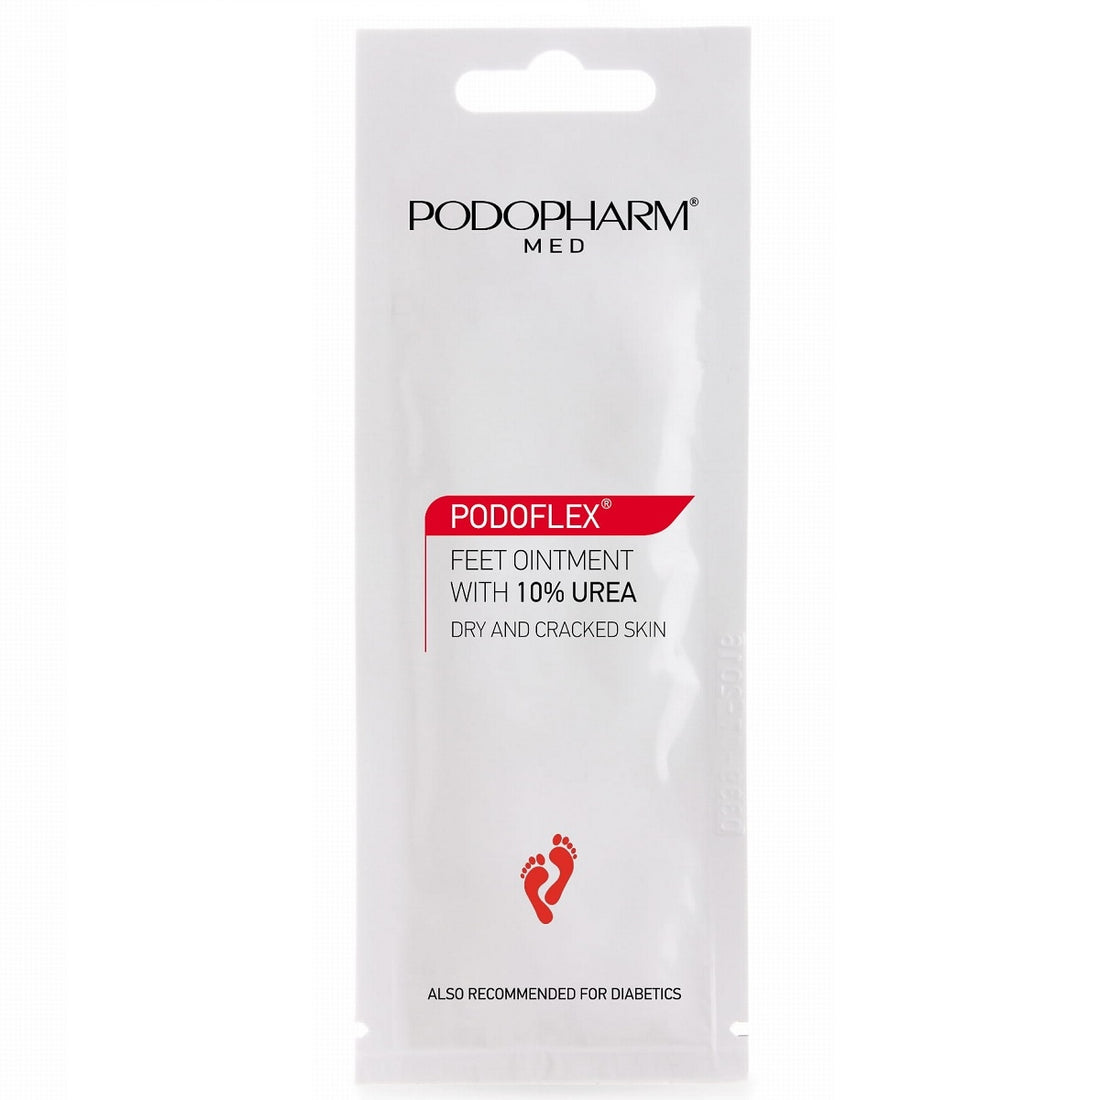 Podopharm Med Podoflex Ointment For Feet With 10% Urea Dry And Cracked Skin 10ml Podopharm